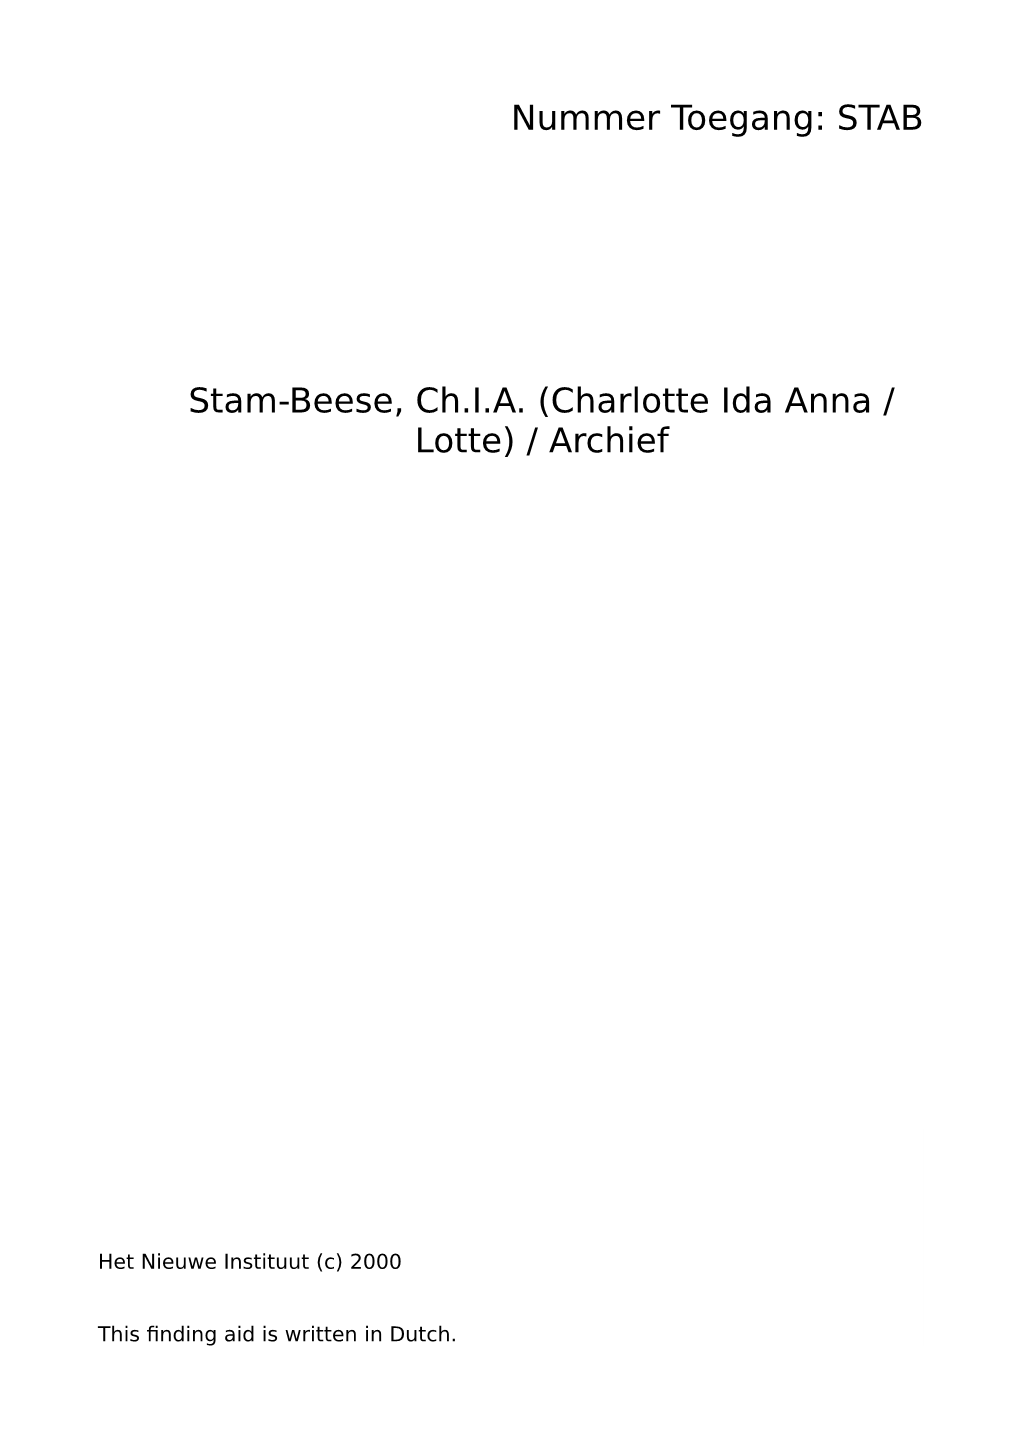 Stam-Beese, Ch.I.A. (Charlotte Ida Anna / Lotte) / Archief